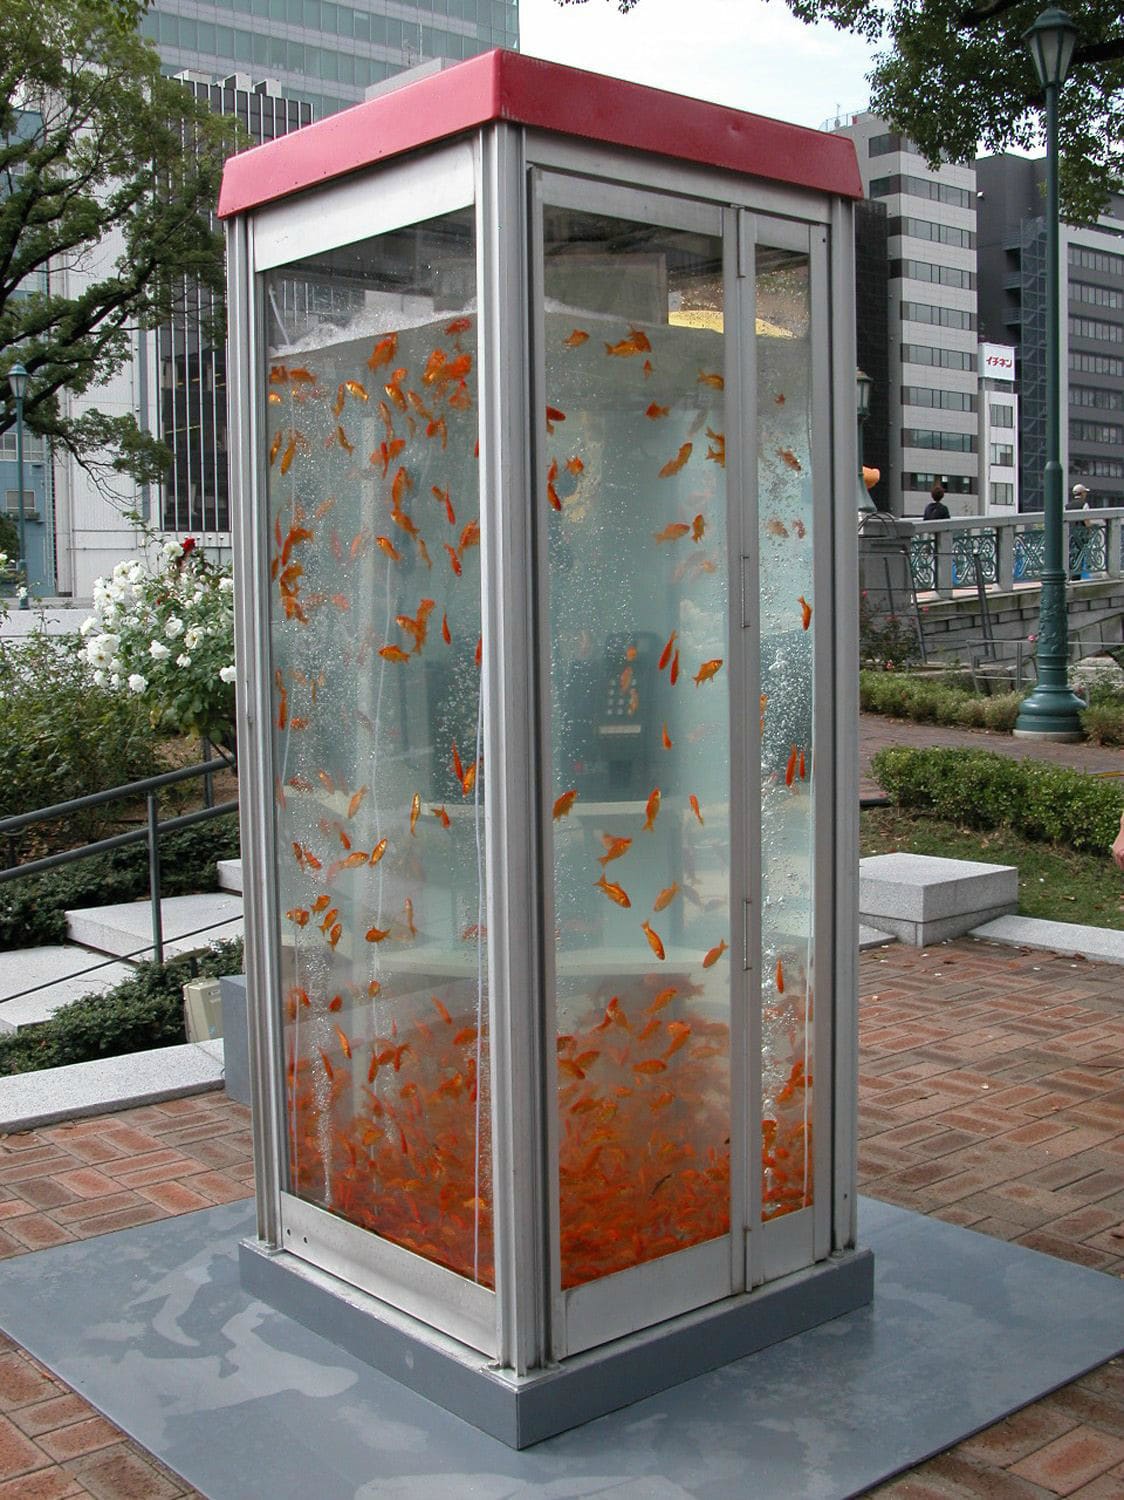 Retro Phone Booths Transformed Into Massive Goldfish Aquariums